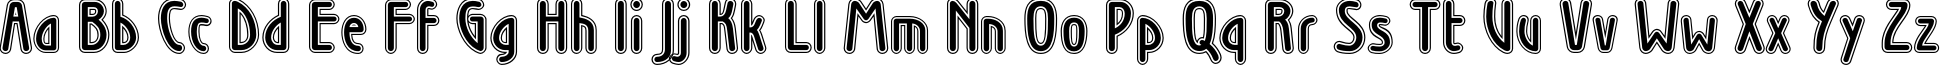 Пример написания английского алфавита шрифтом WienInline